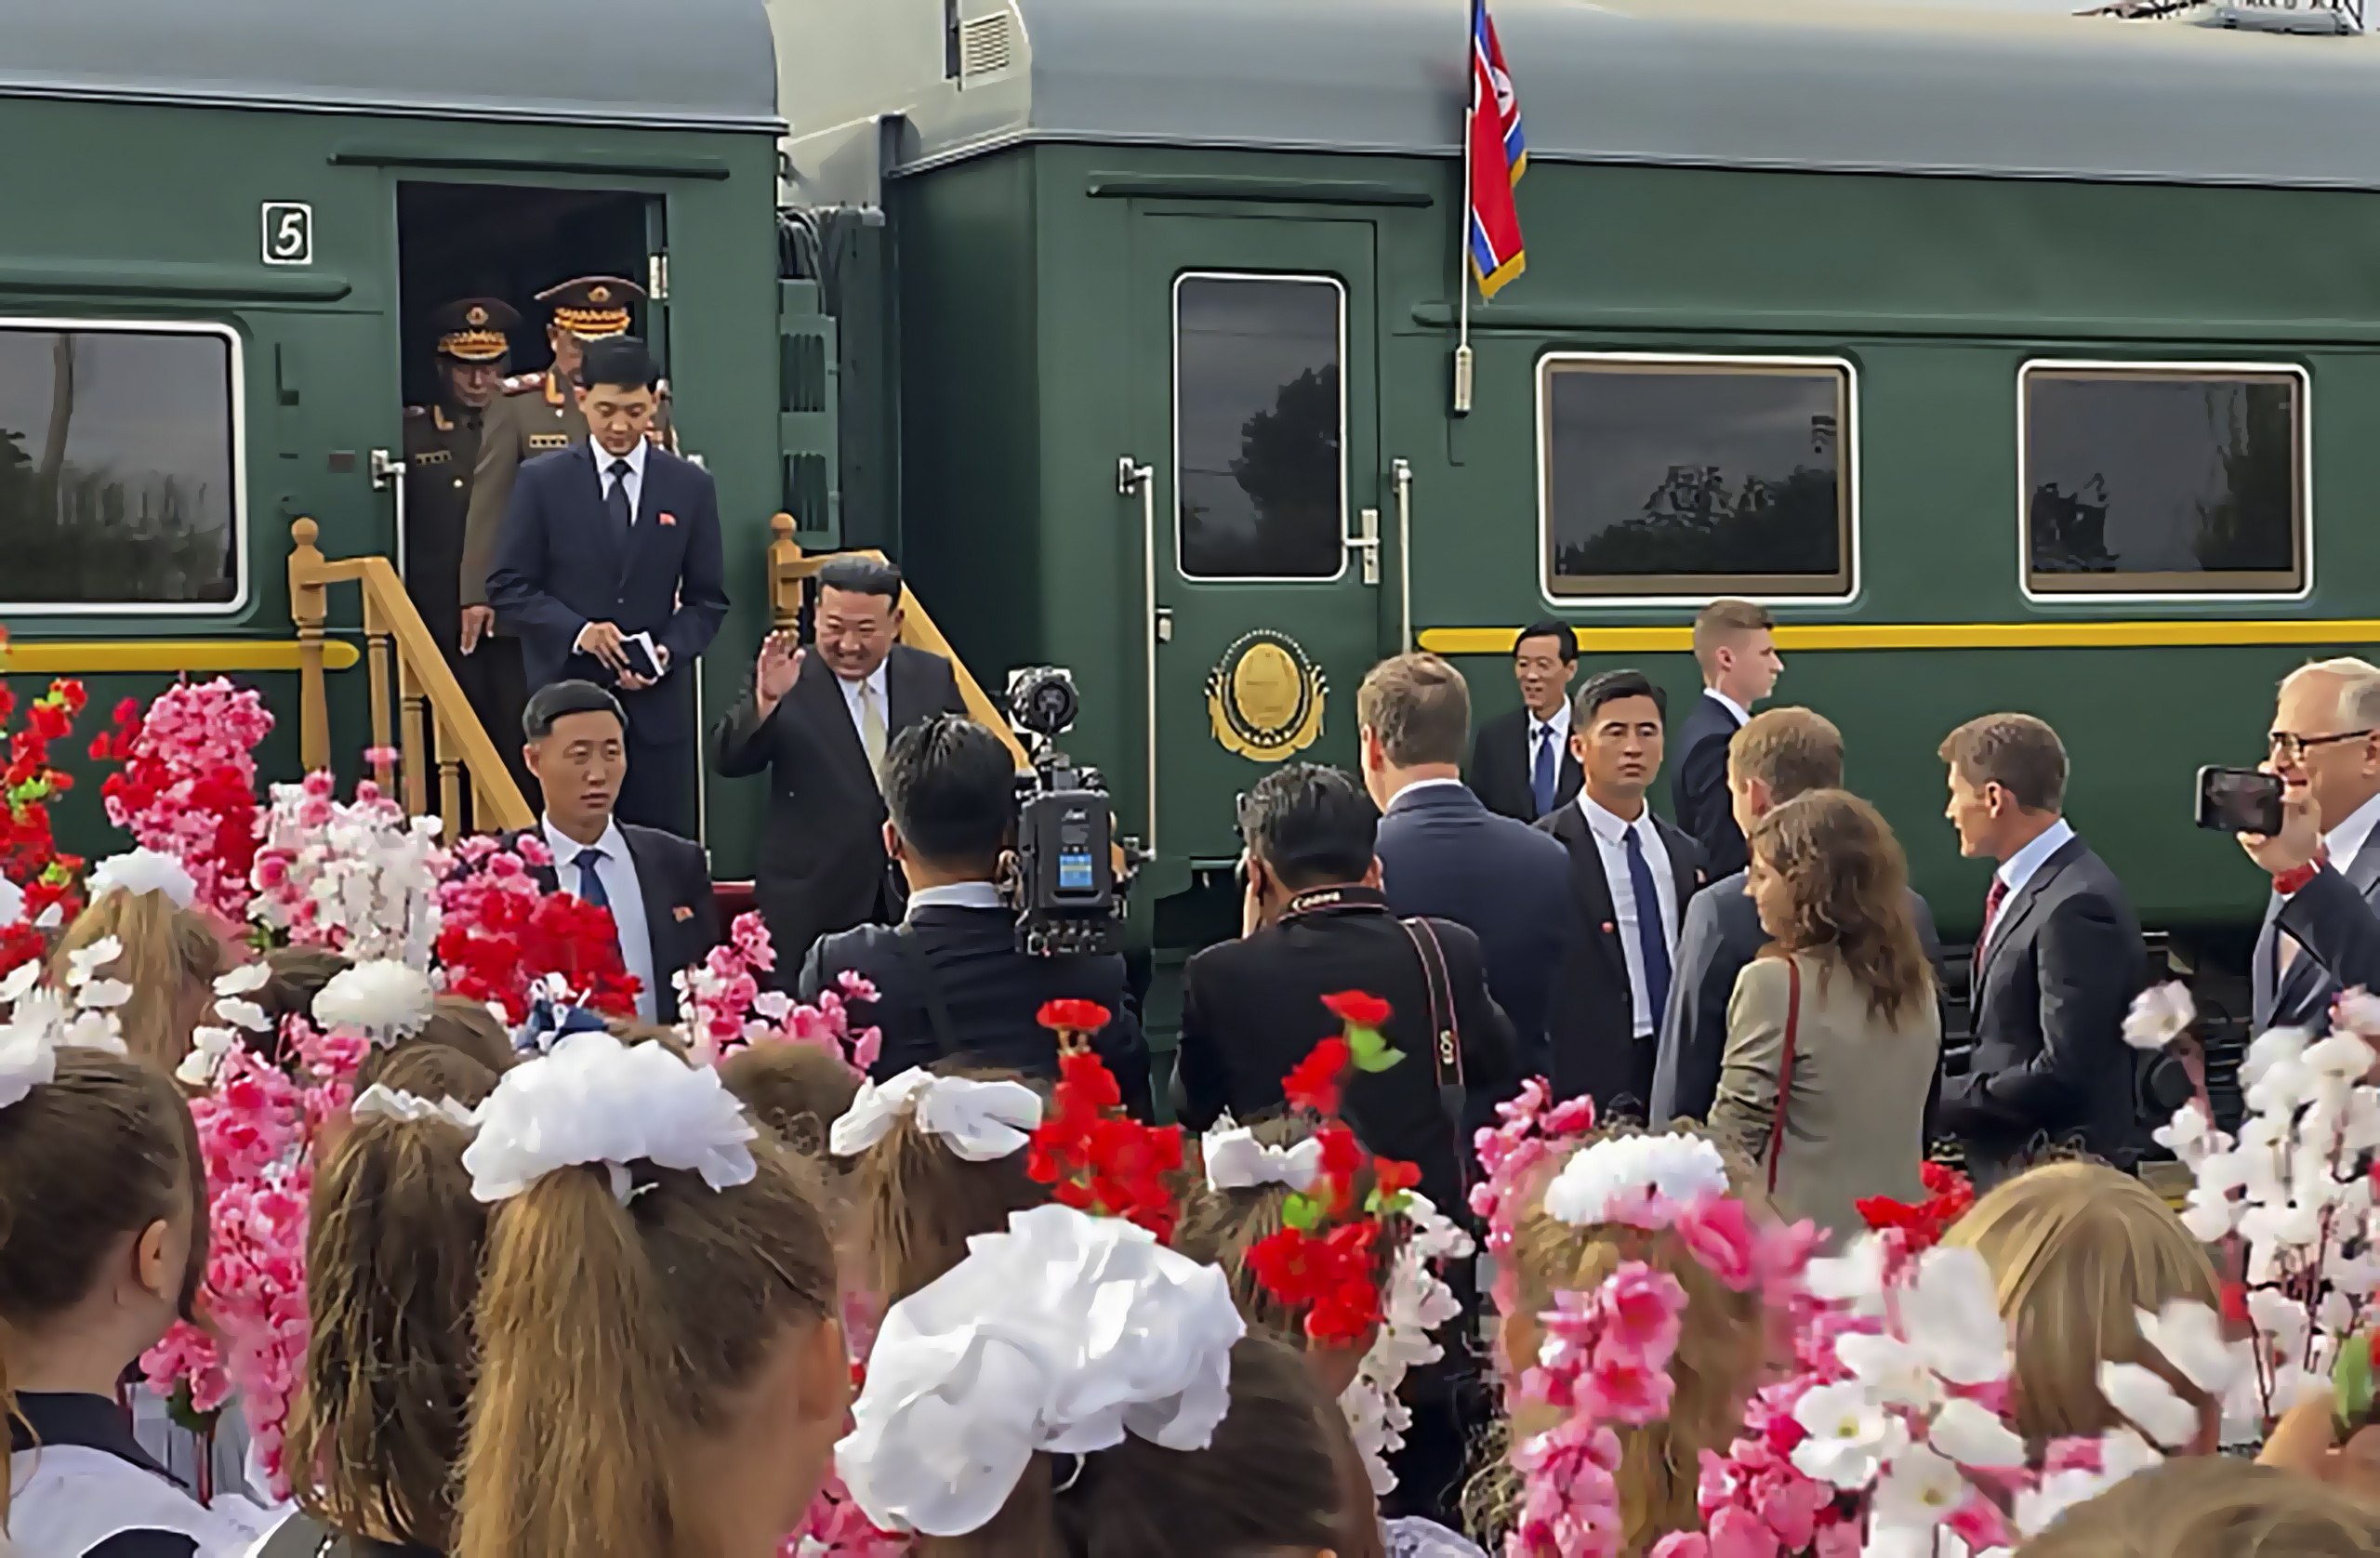 North Korea’s leader Kim Jong-un arrives in the town of Artyom outside Vladivostok. Photo: EPA-EFE/Governor of Primorsky region